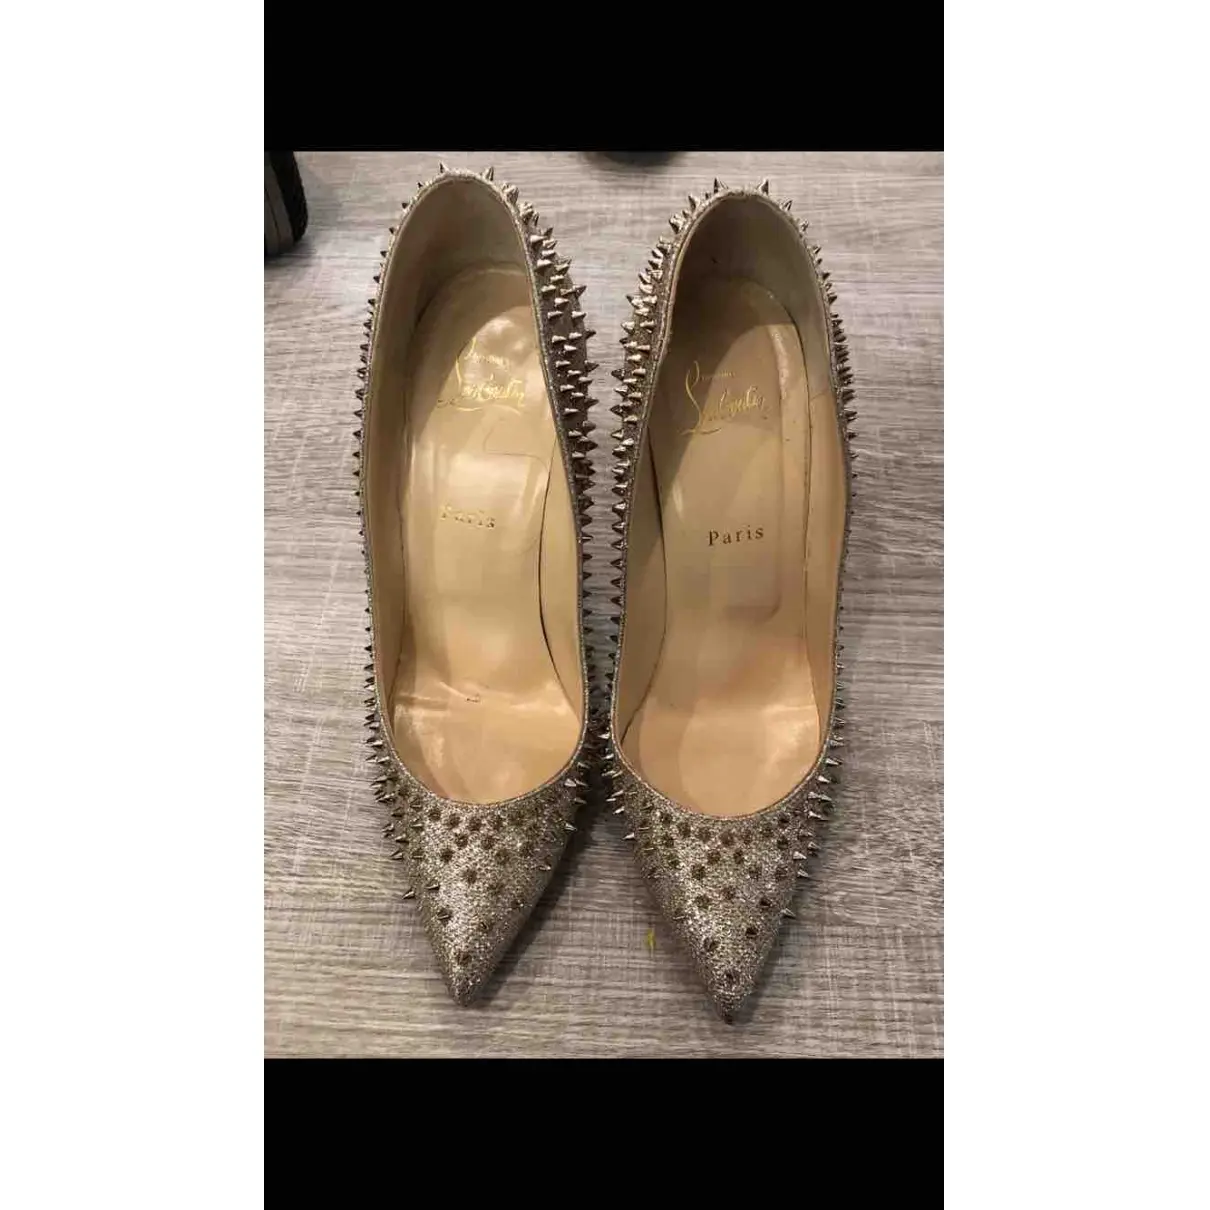 Buy Christian Louboutin Pigalle glitter heels online